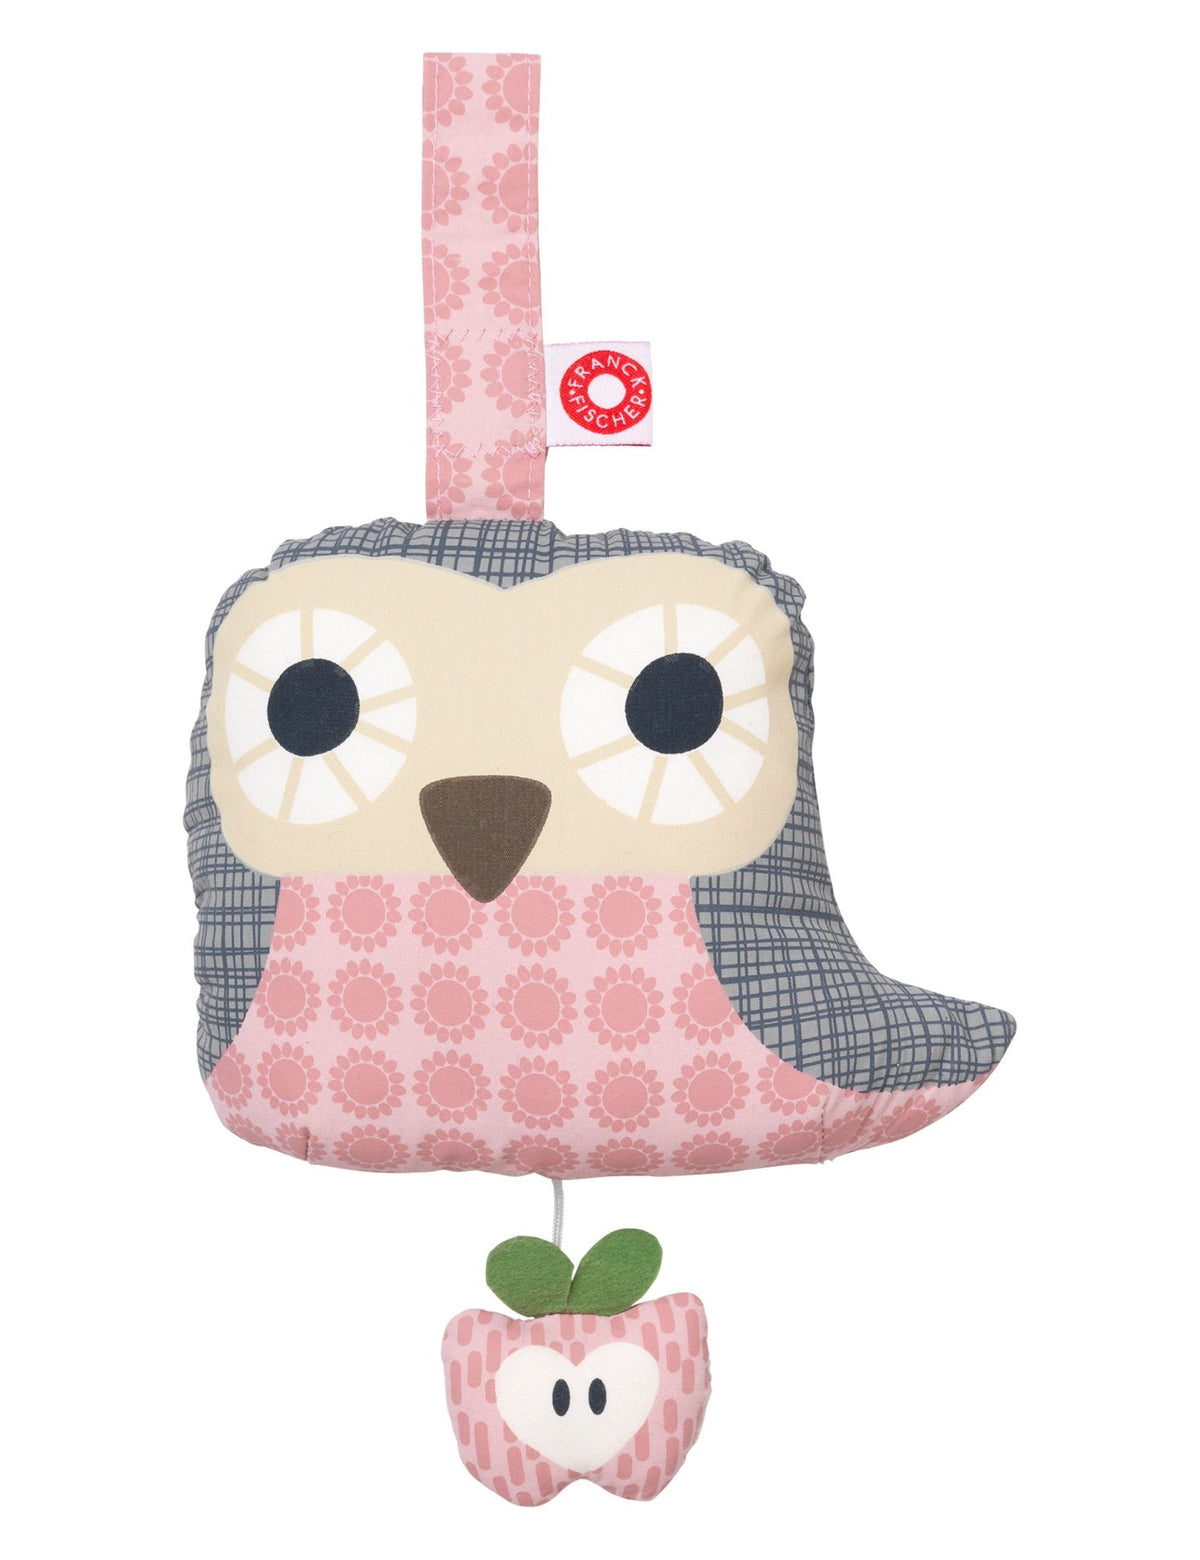 Else Pink Owl Musical Toy by Franck & Fischer - Maude Kids Decor